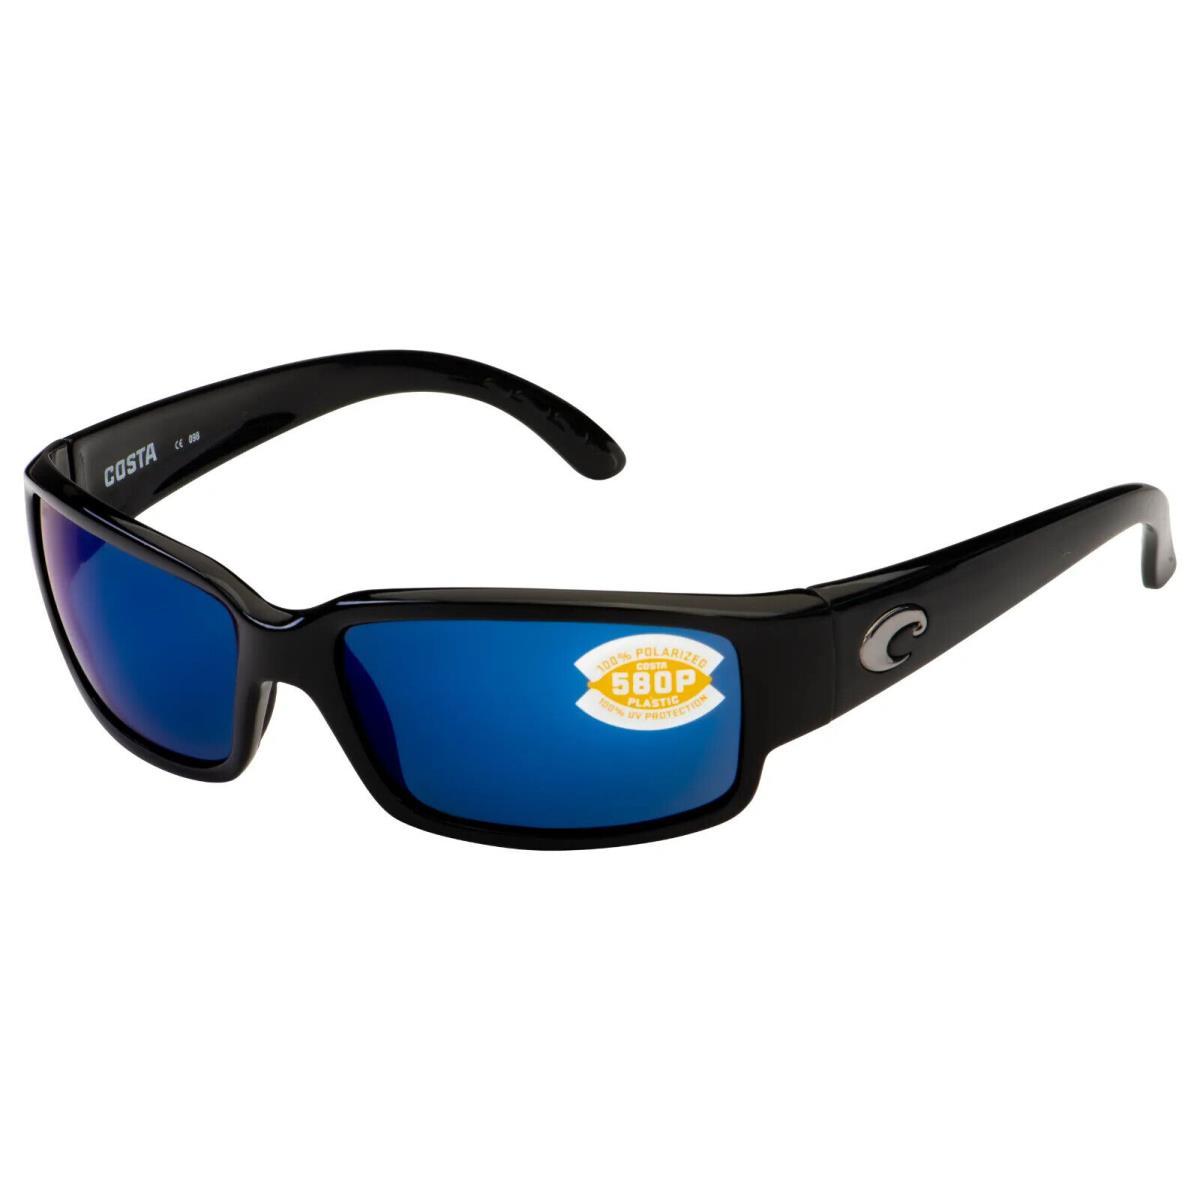 Costa Del Mar CL 11 Obmp Caballito Sunglasses Shiny Black Blue Mirror 580P - Black Frame, Blue Lens